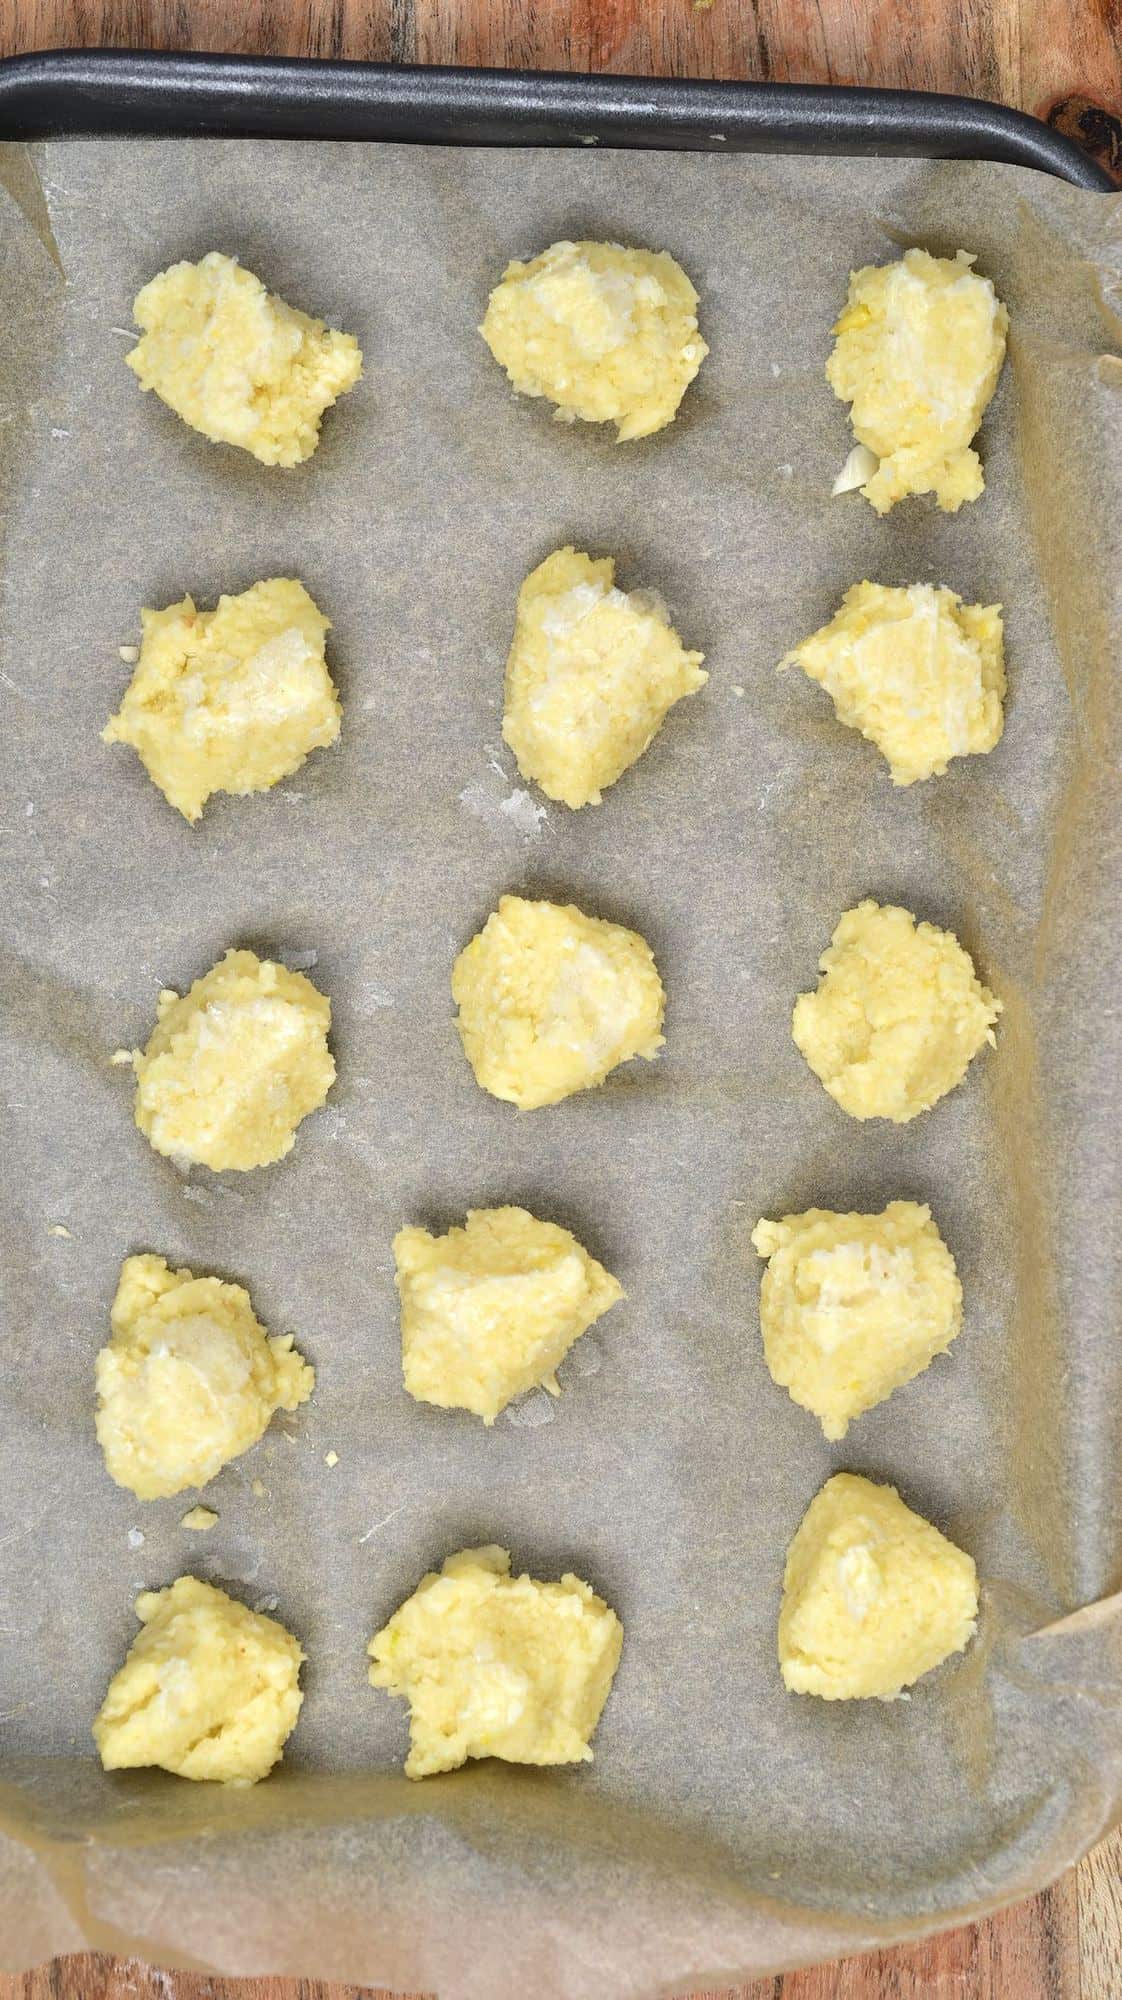 Frozen garlic chunks on a tray